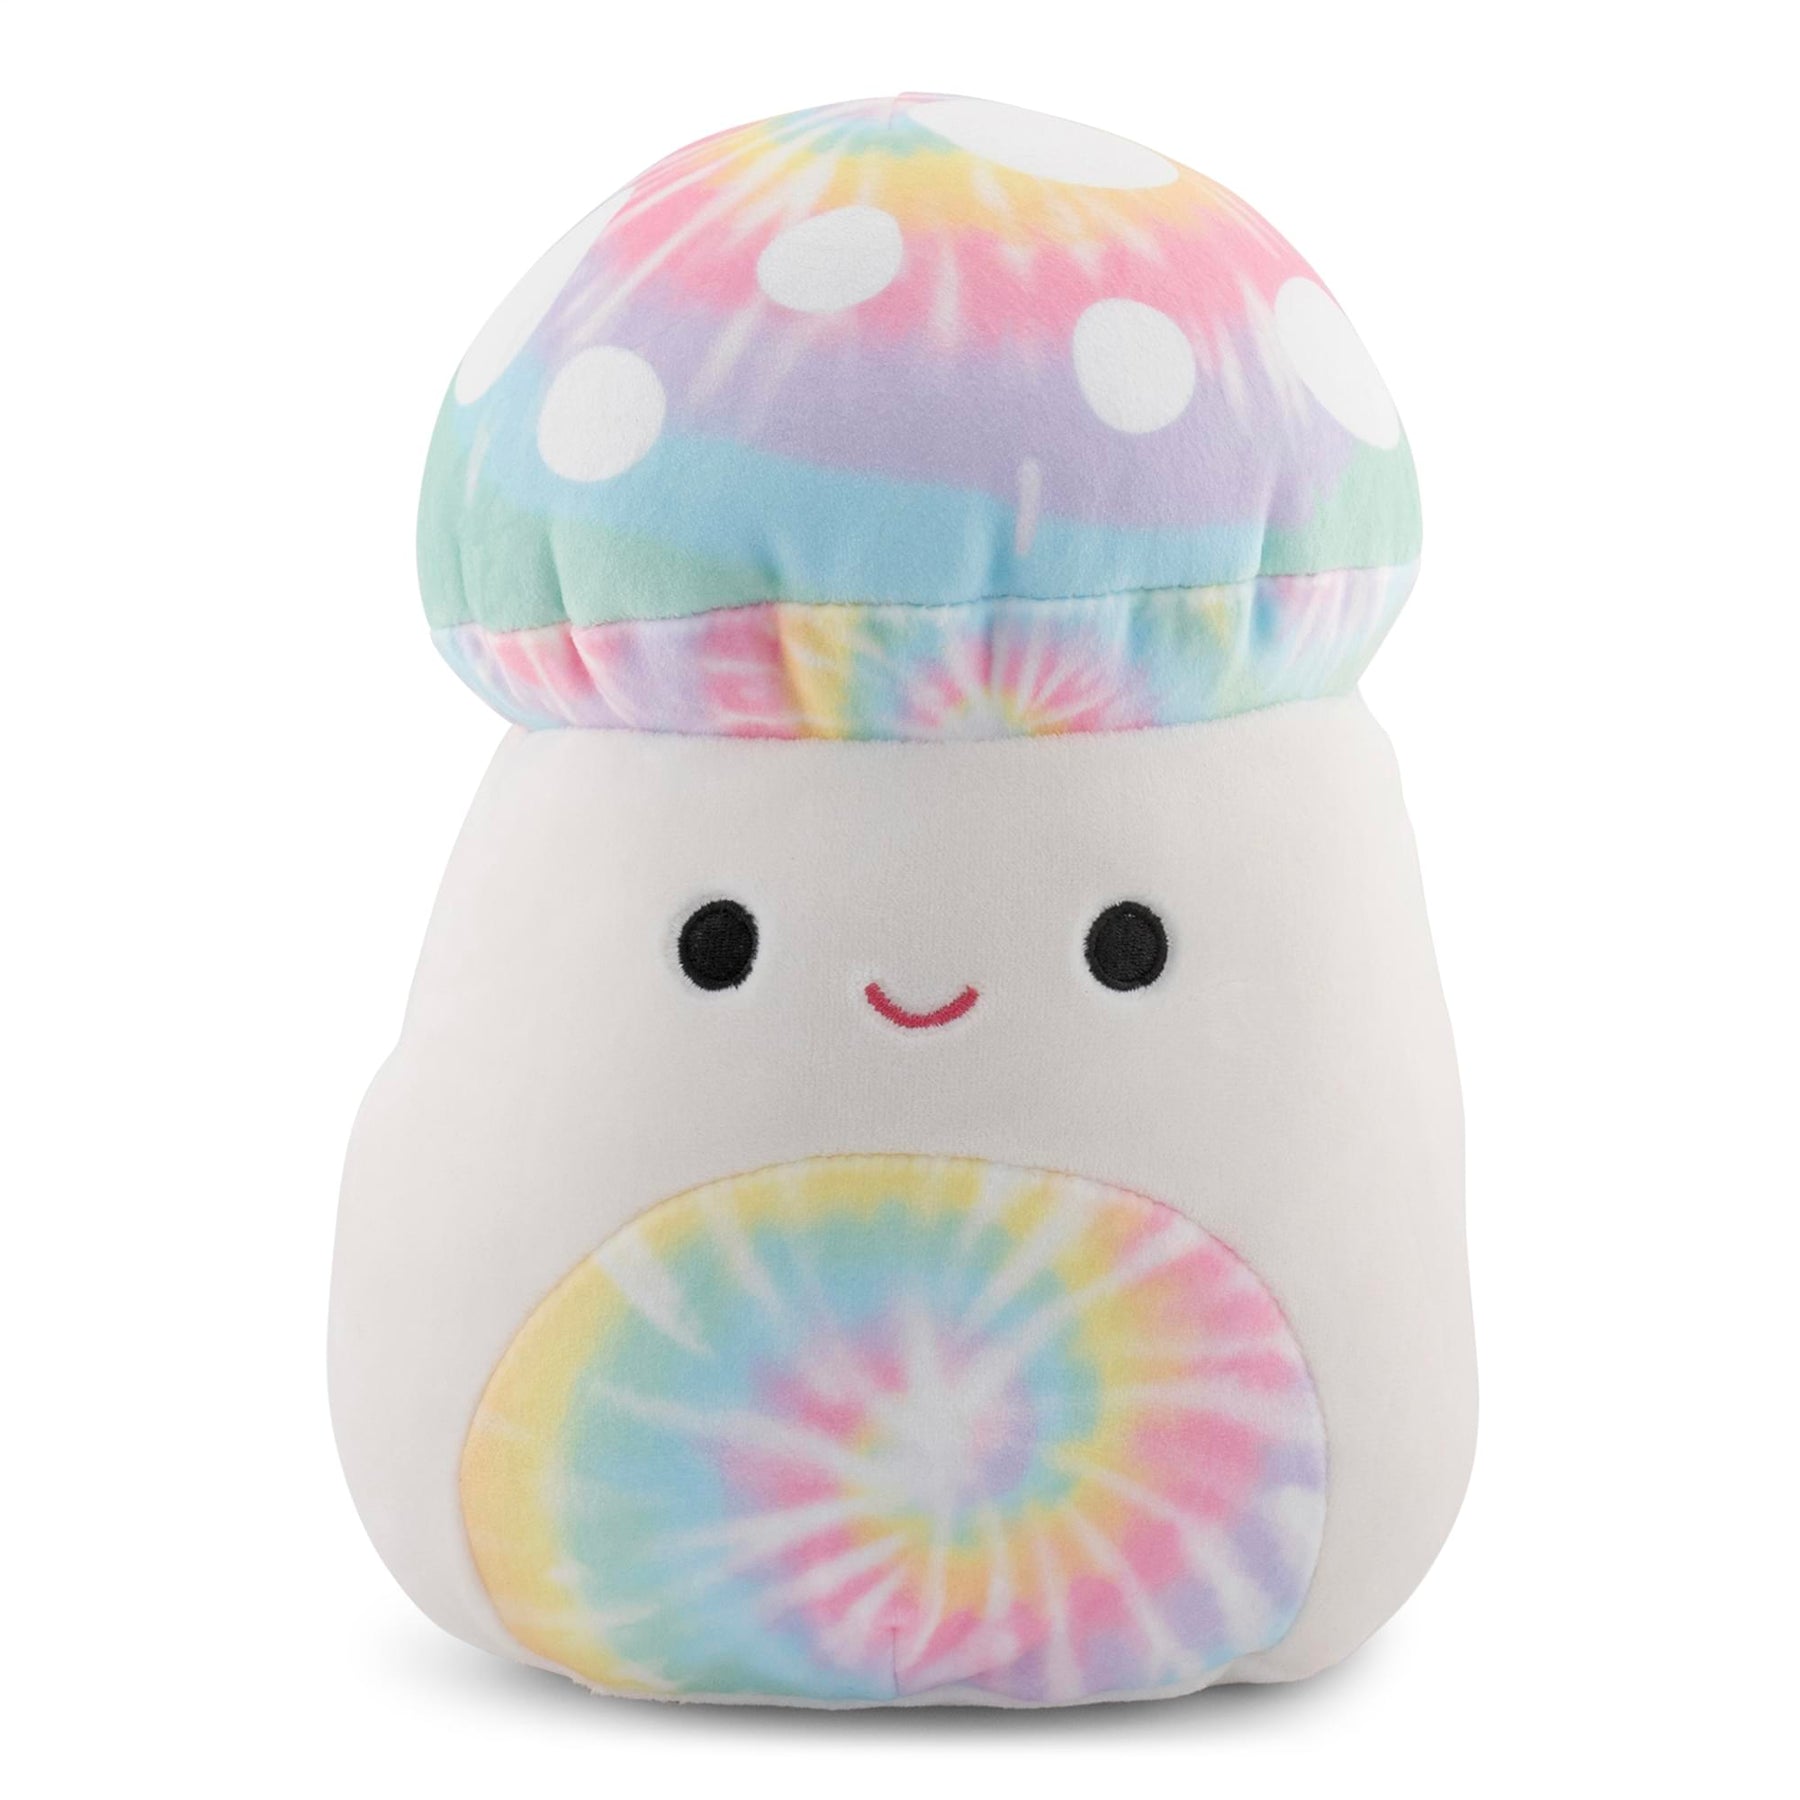 Squishmallows Fan Favorites 8 Inch Plush | Kervena The Tie Dye Mushroom